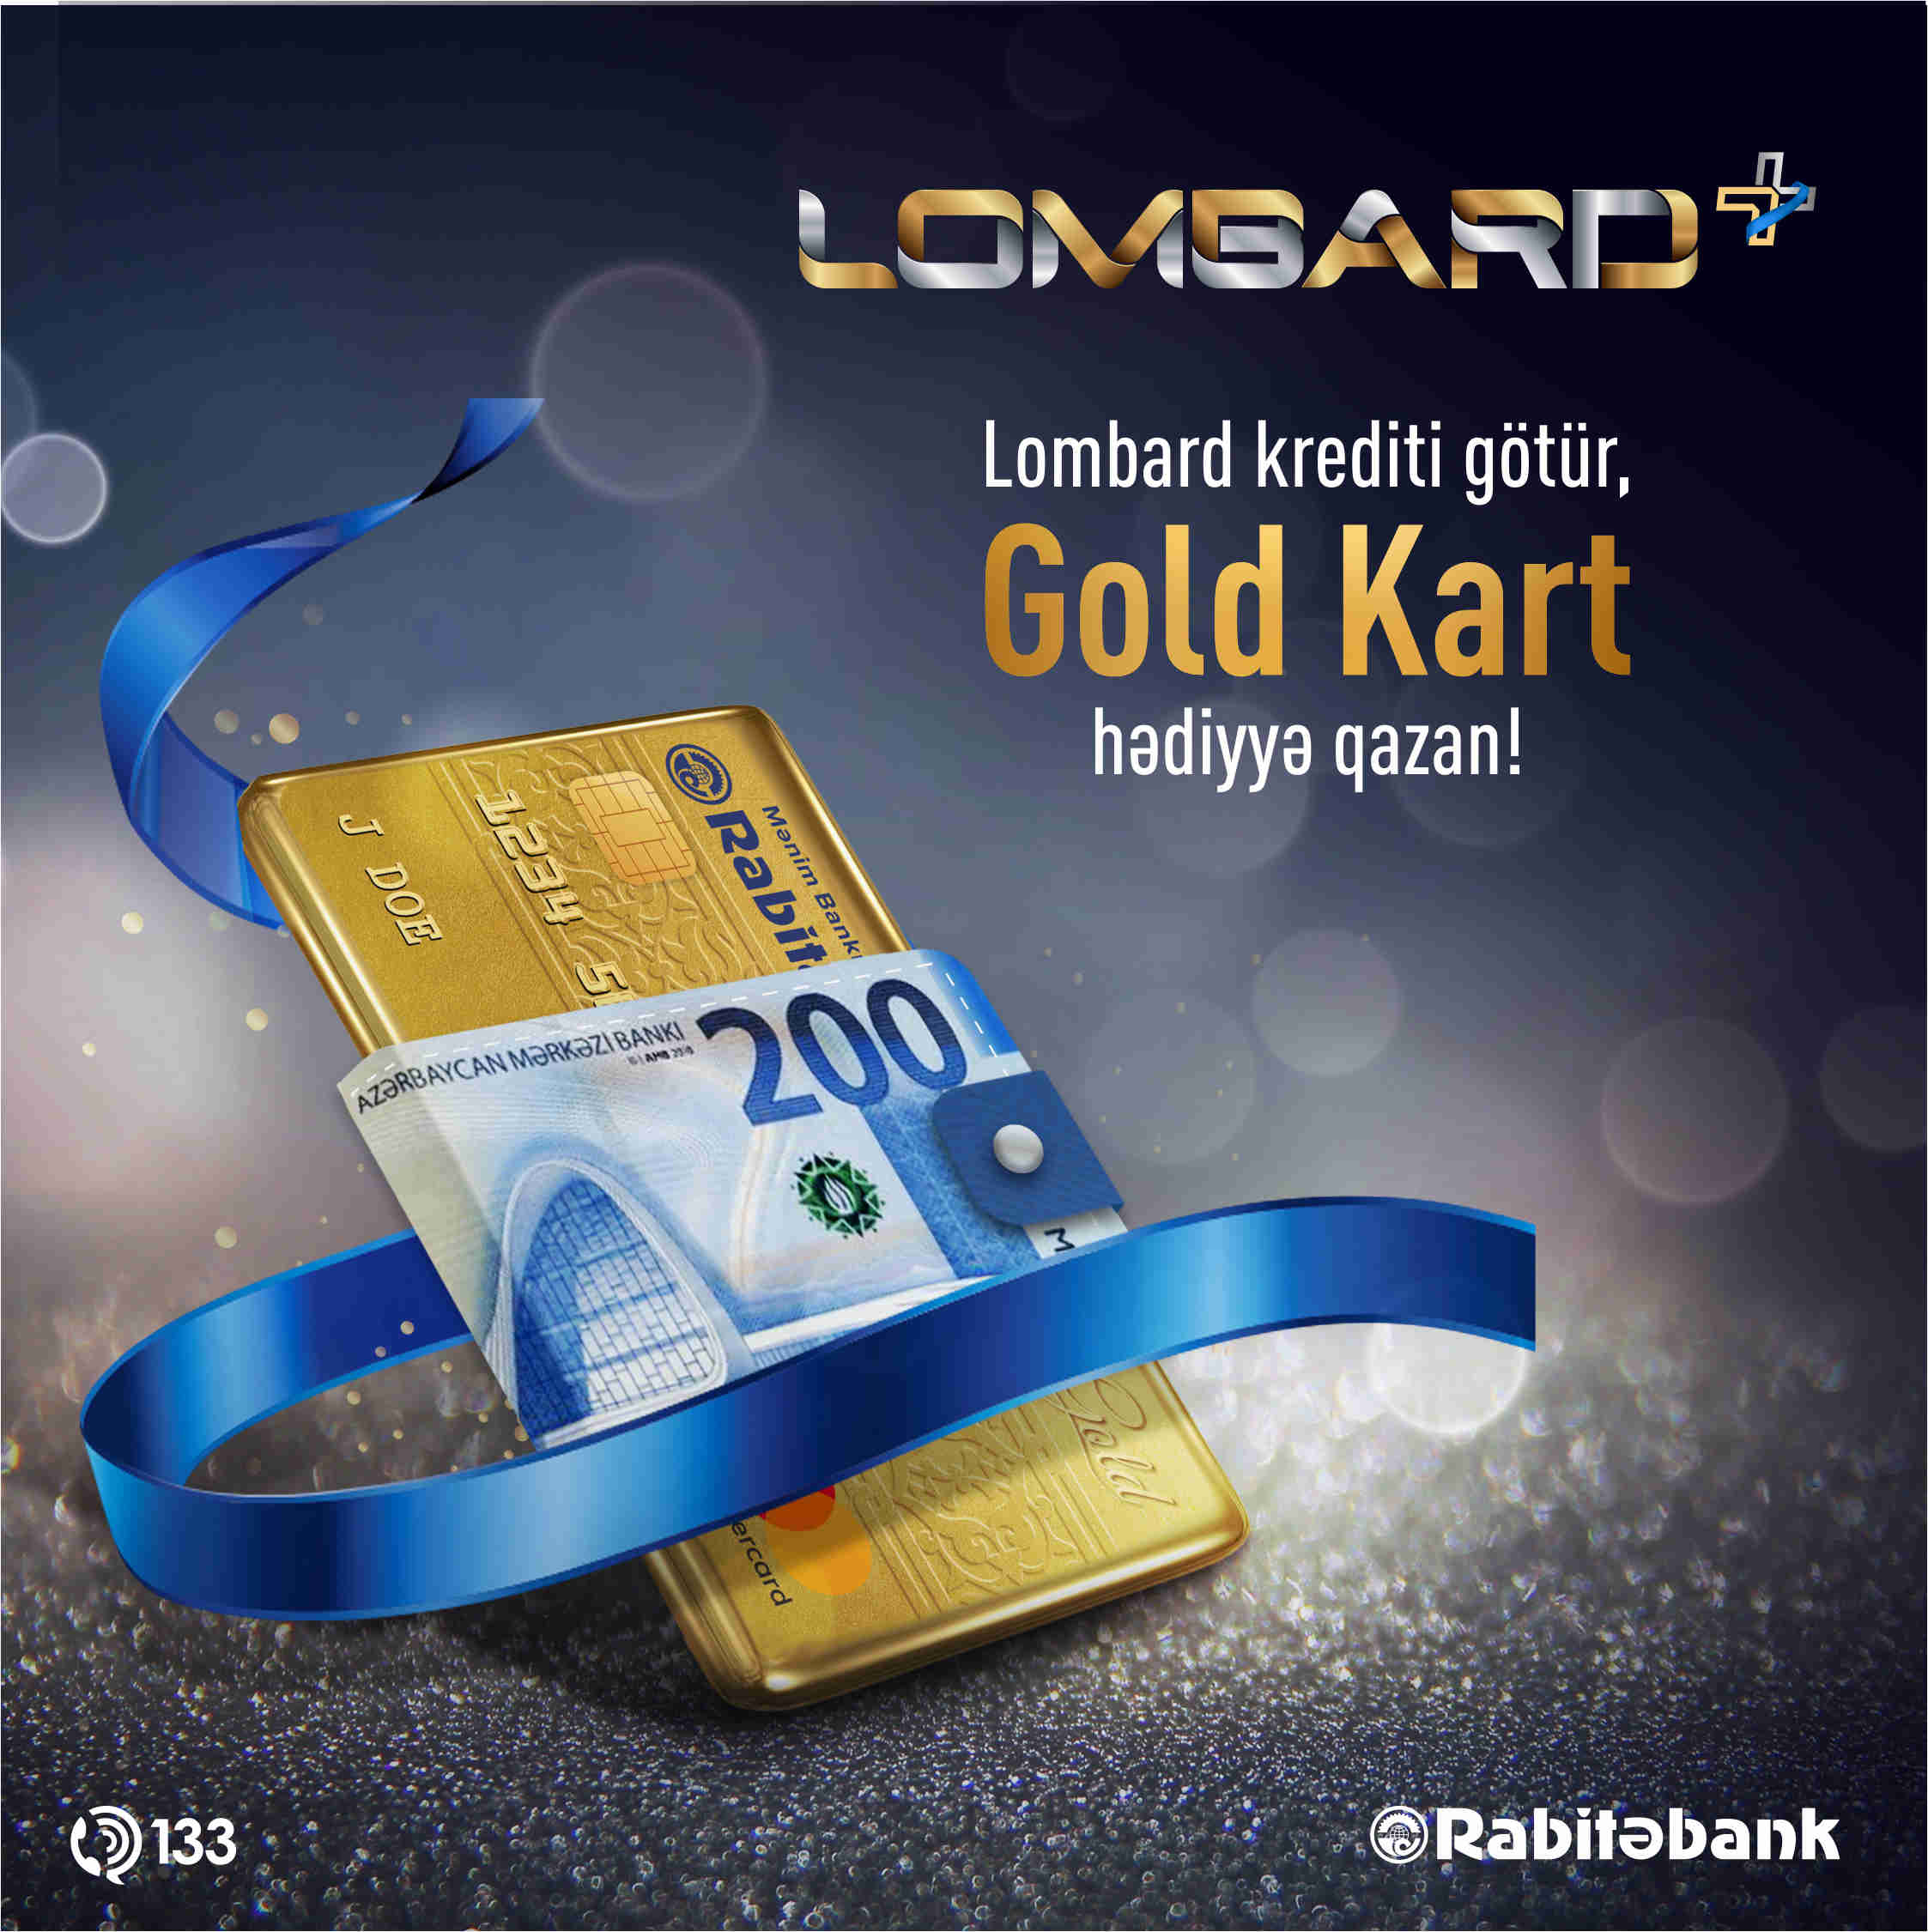 Rabitəbankdan Lombard krediti al – Gold Kart qazan!